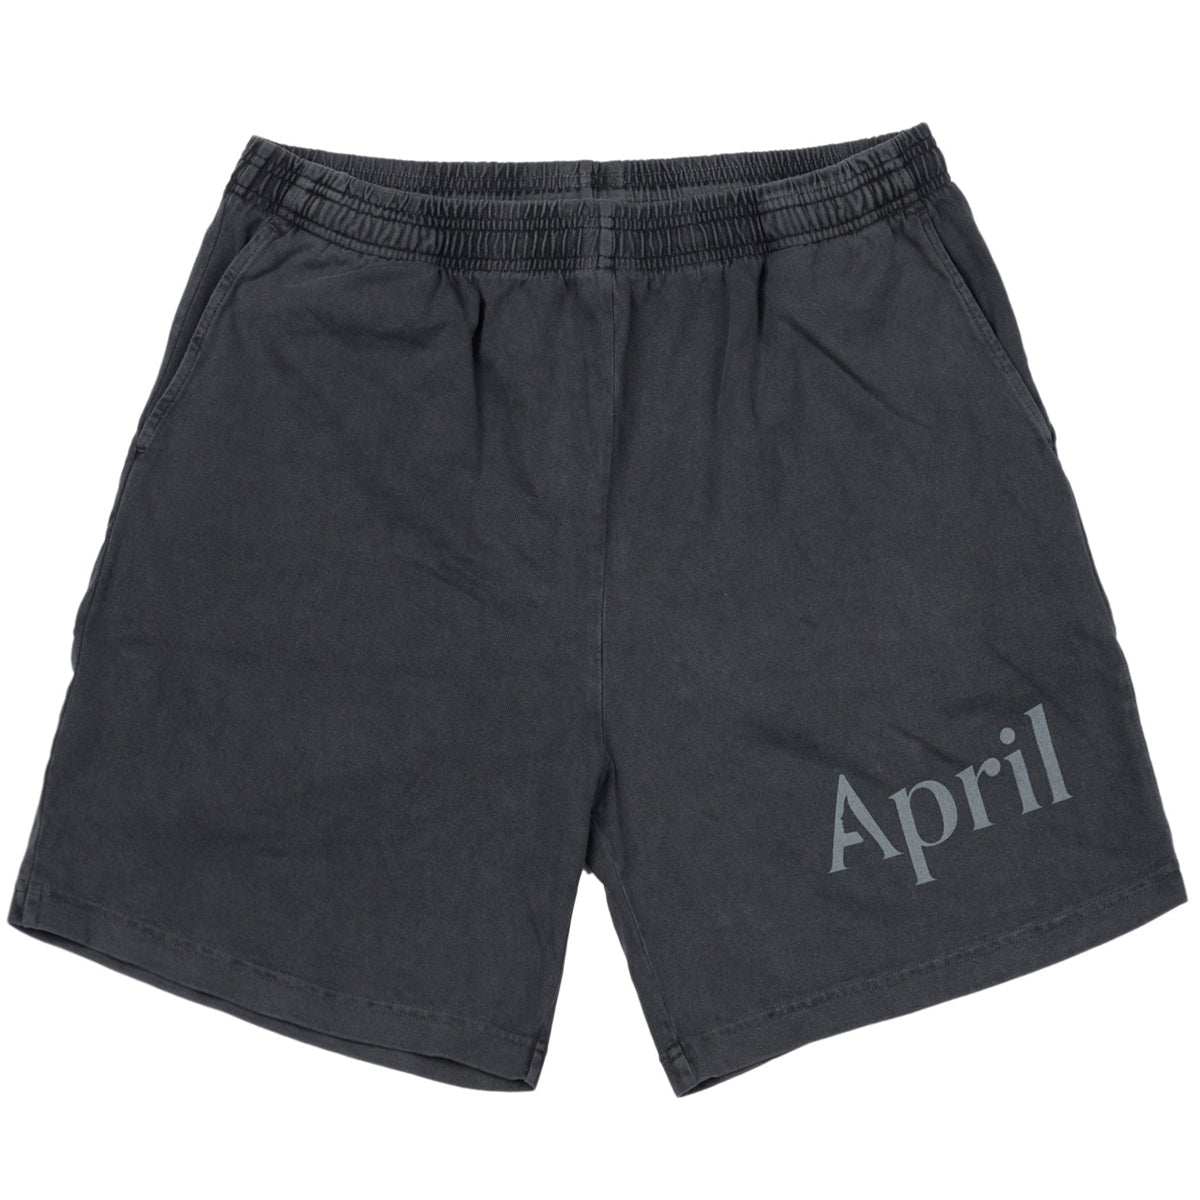 April Reflective Shorts - Vintage Black